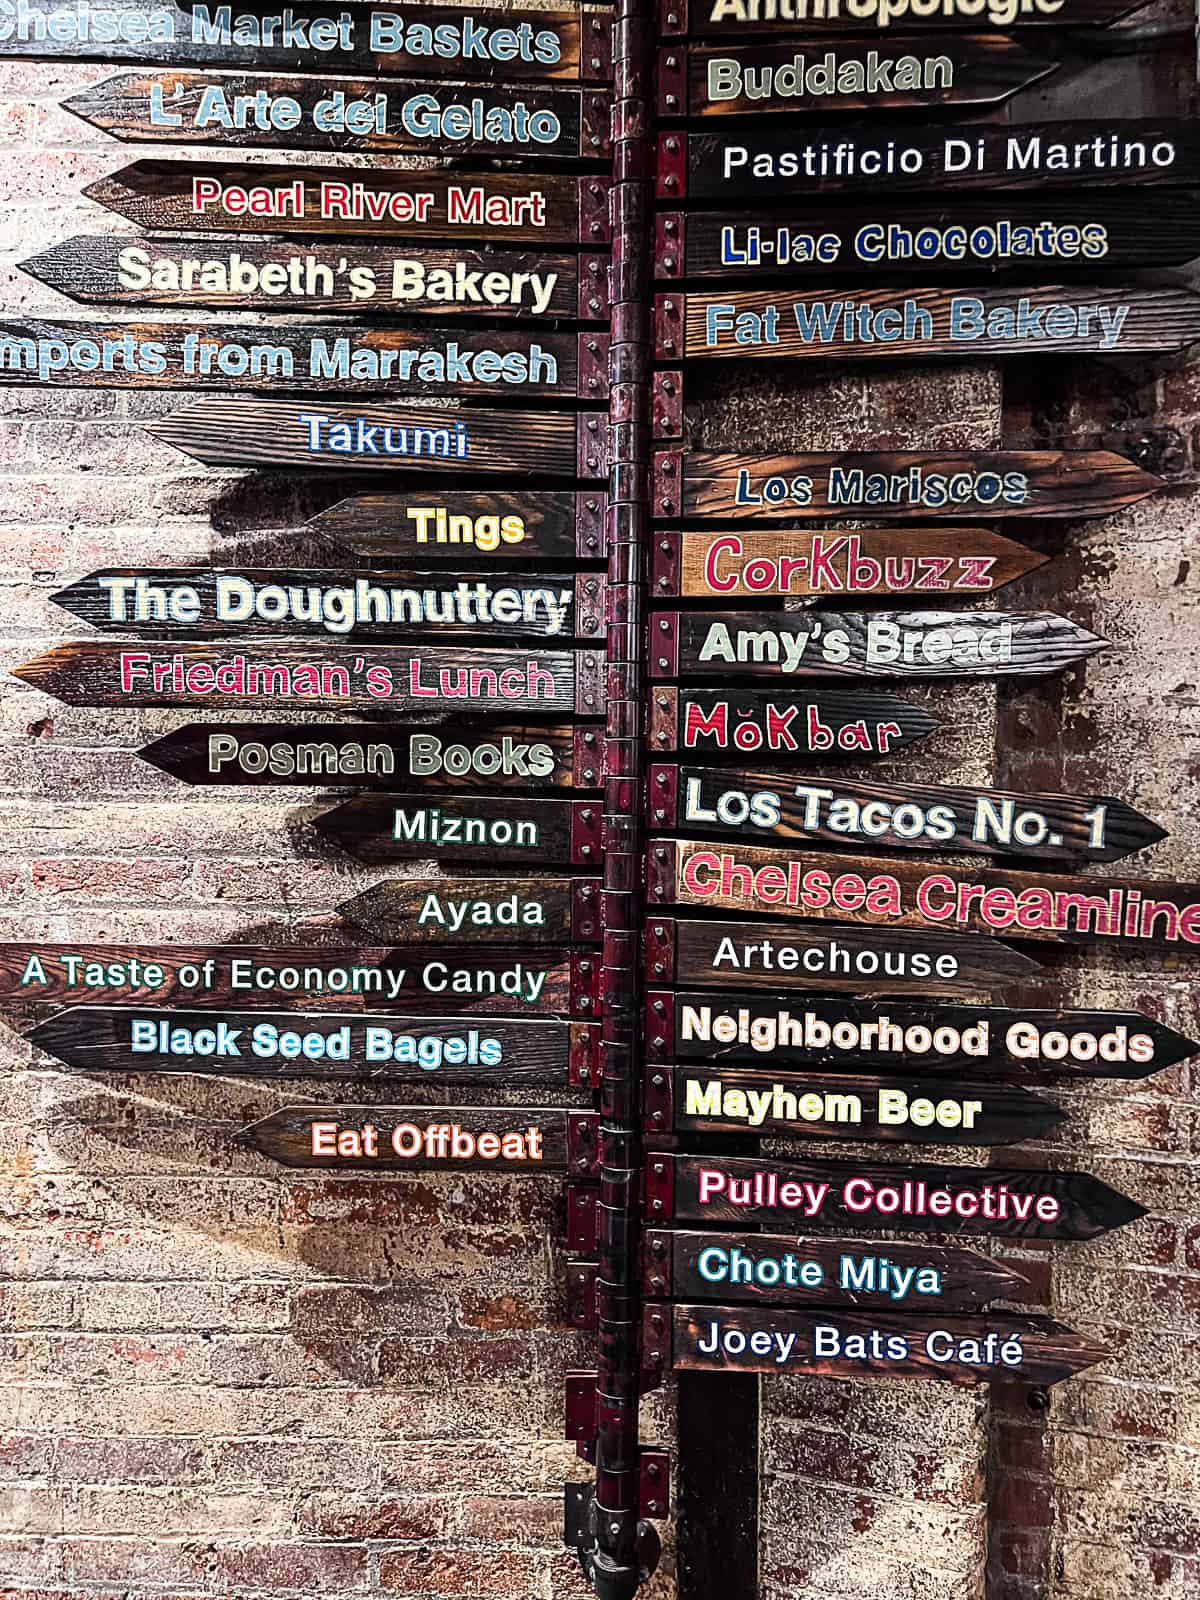 List of kid friendly restaurants inside Chelsea Market NYC